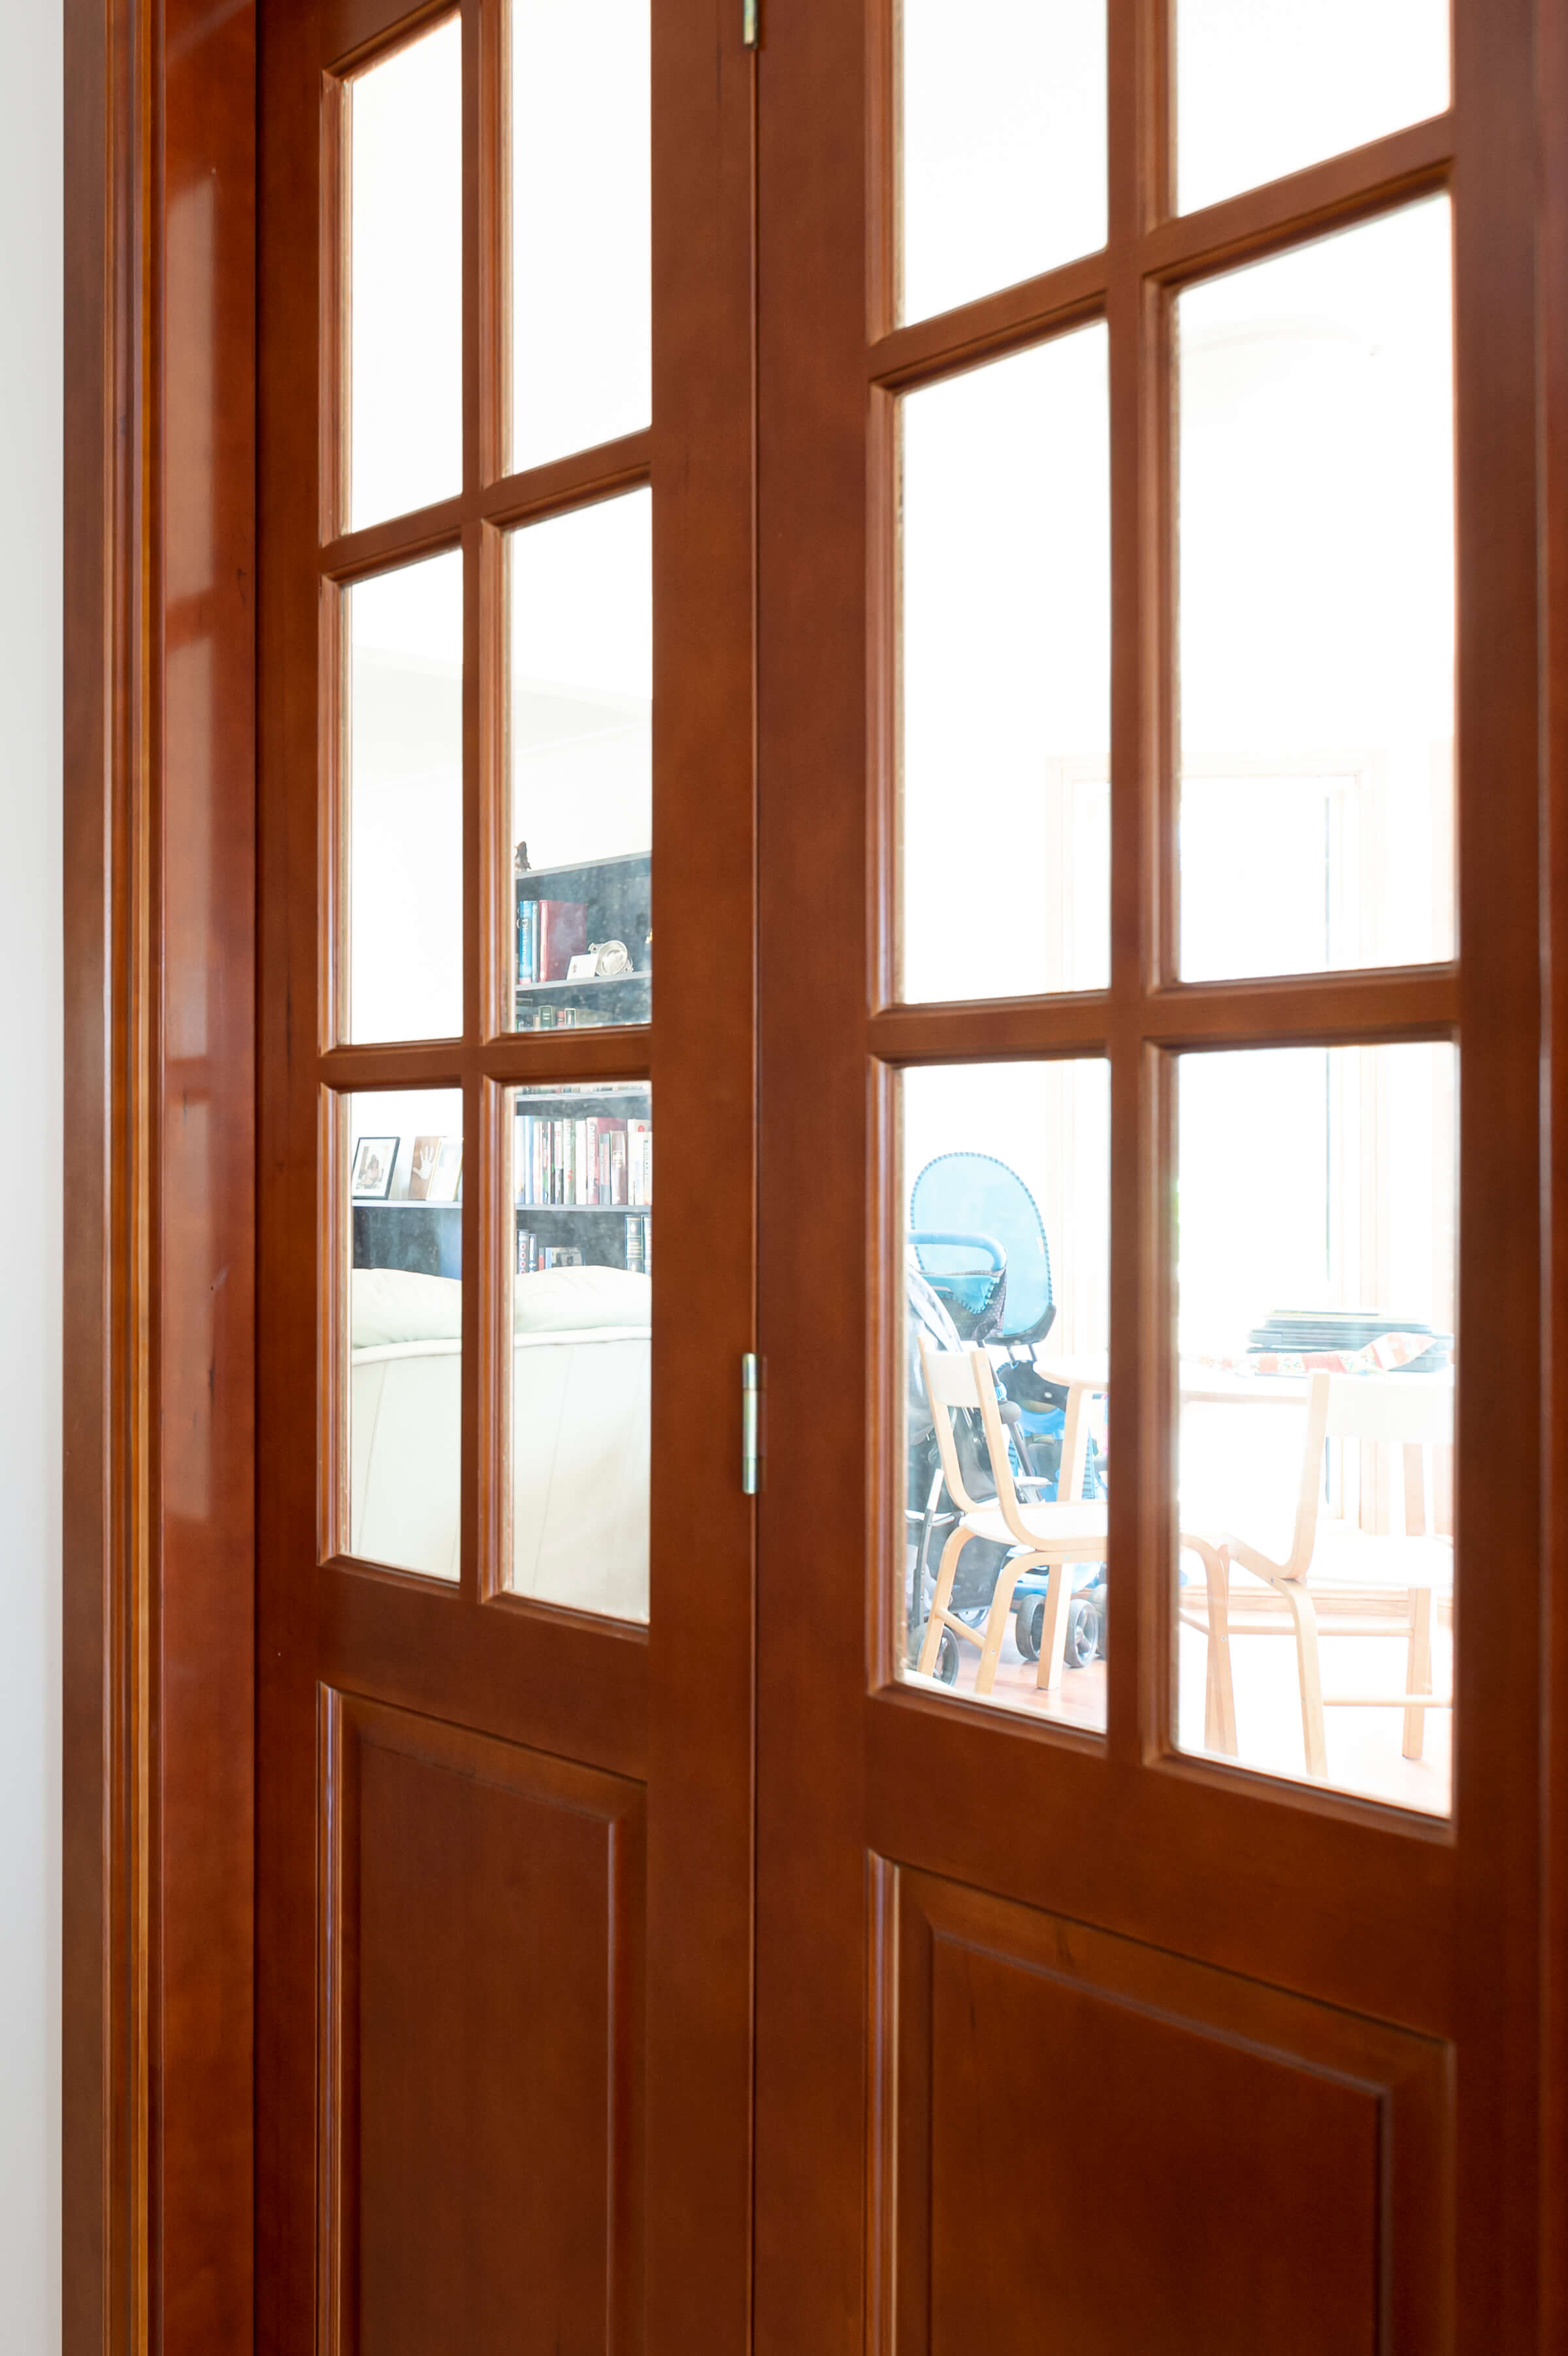 Doors Plus - Internal Bifolds Featuring 6 Lites each - Finished in Dark Maple